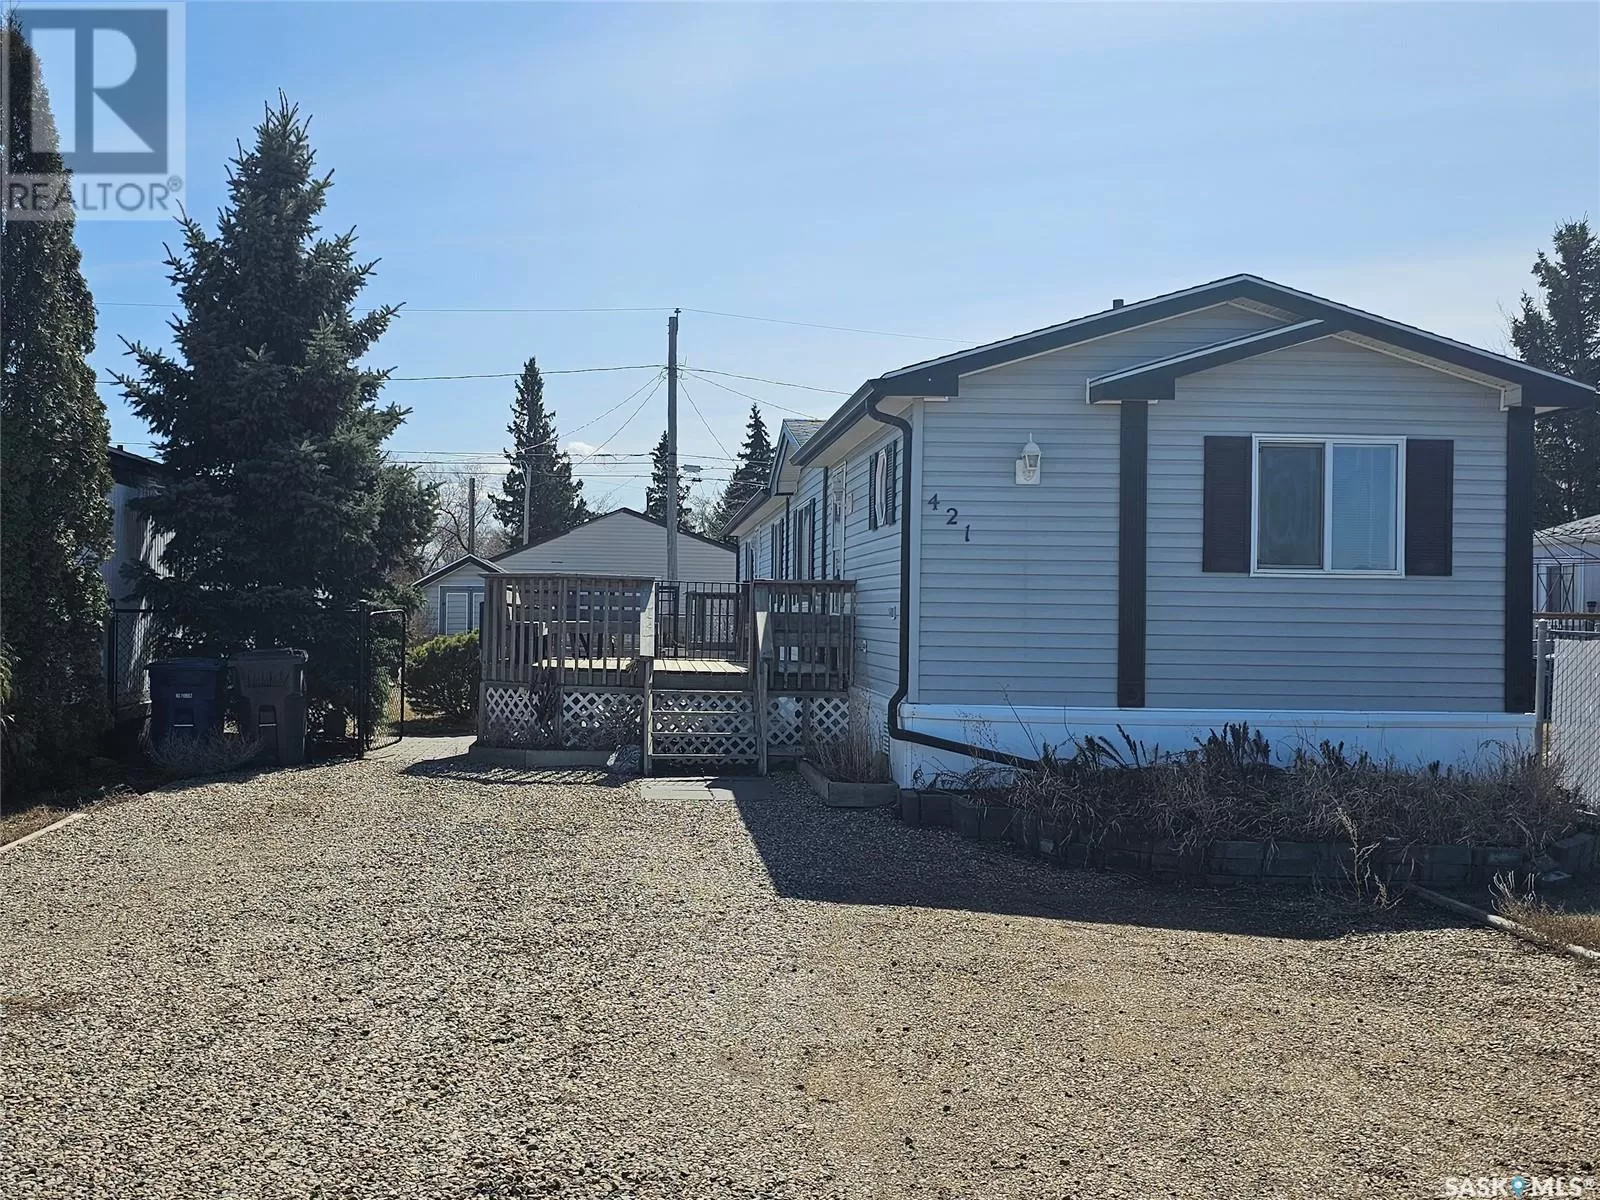 Mobile Home for rent: 421 35th Street, Battleford, Saskatchewan S0M 0E0